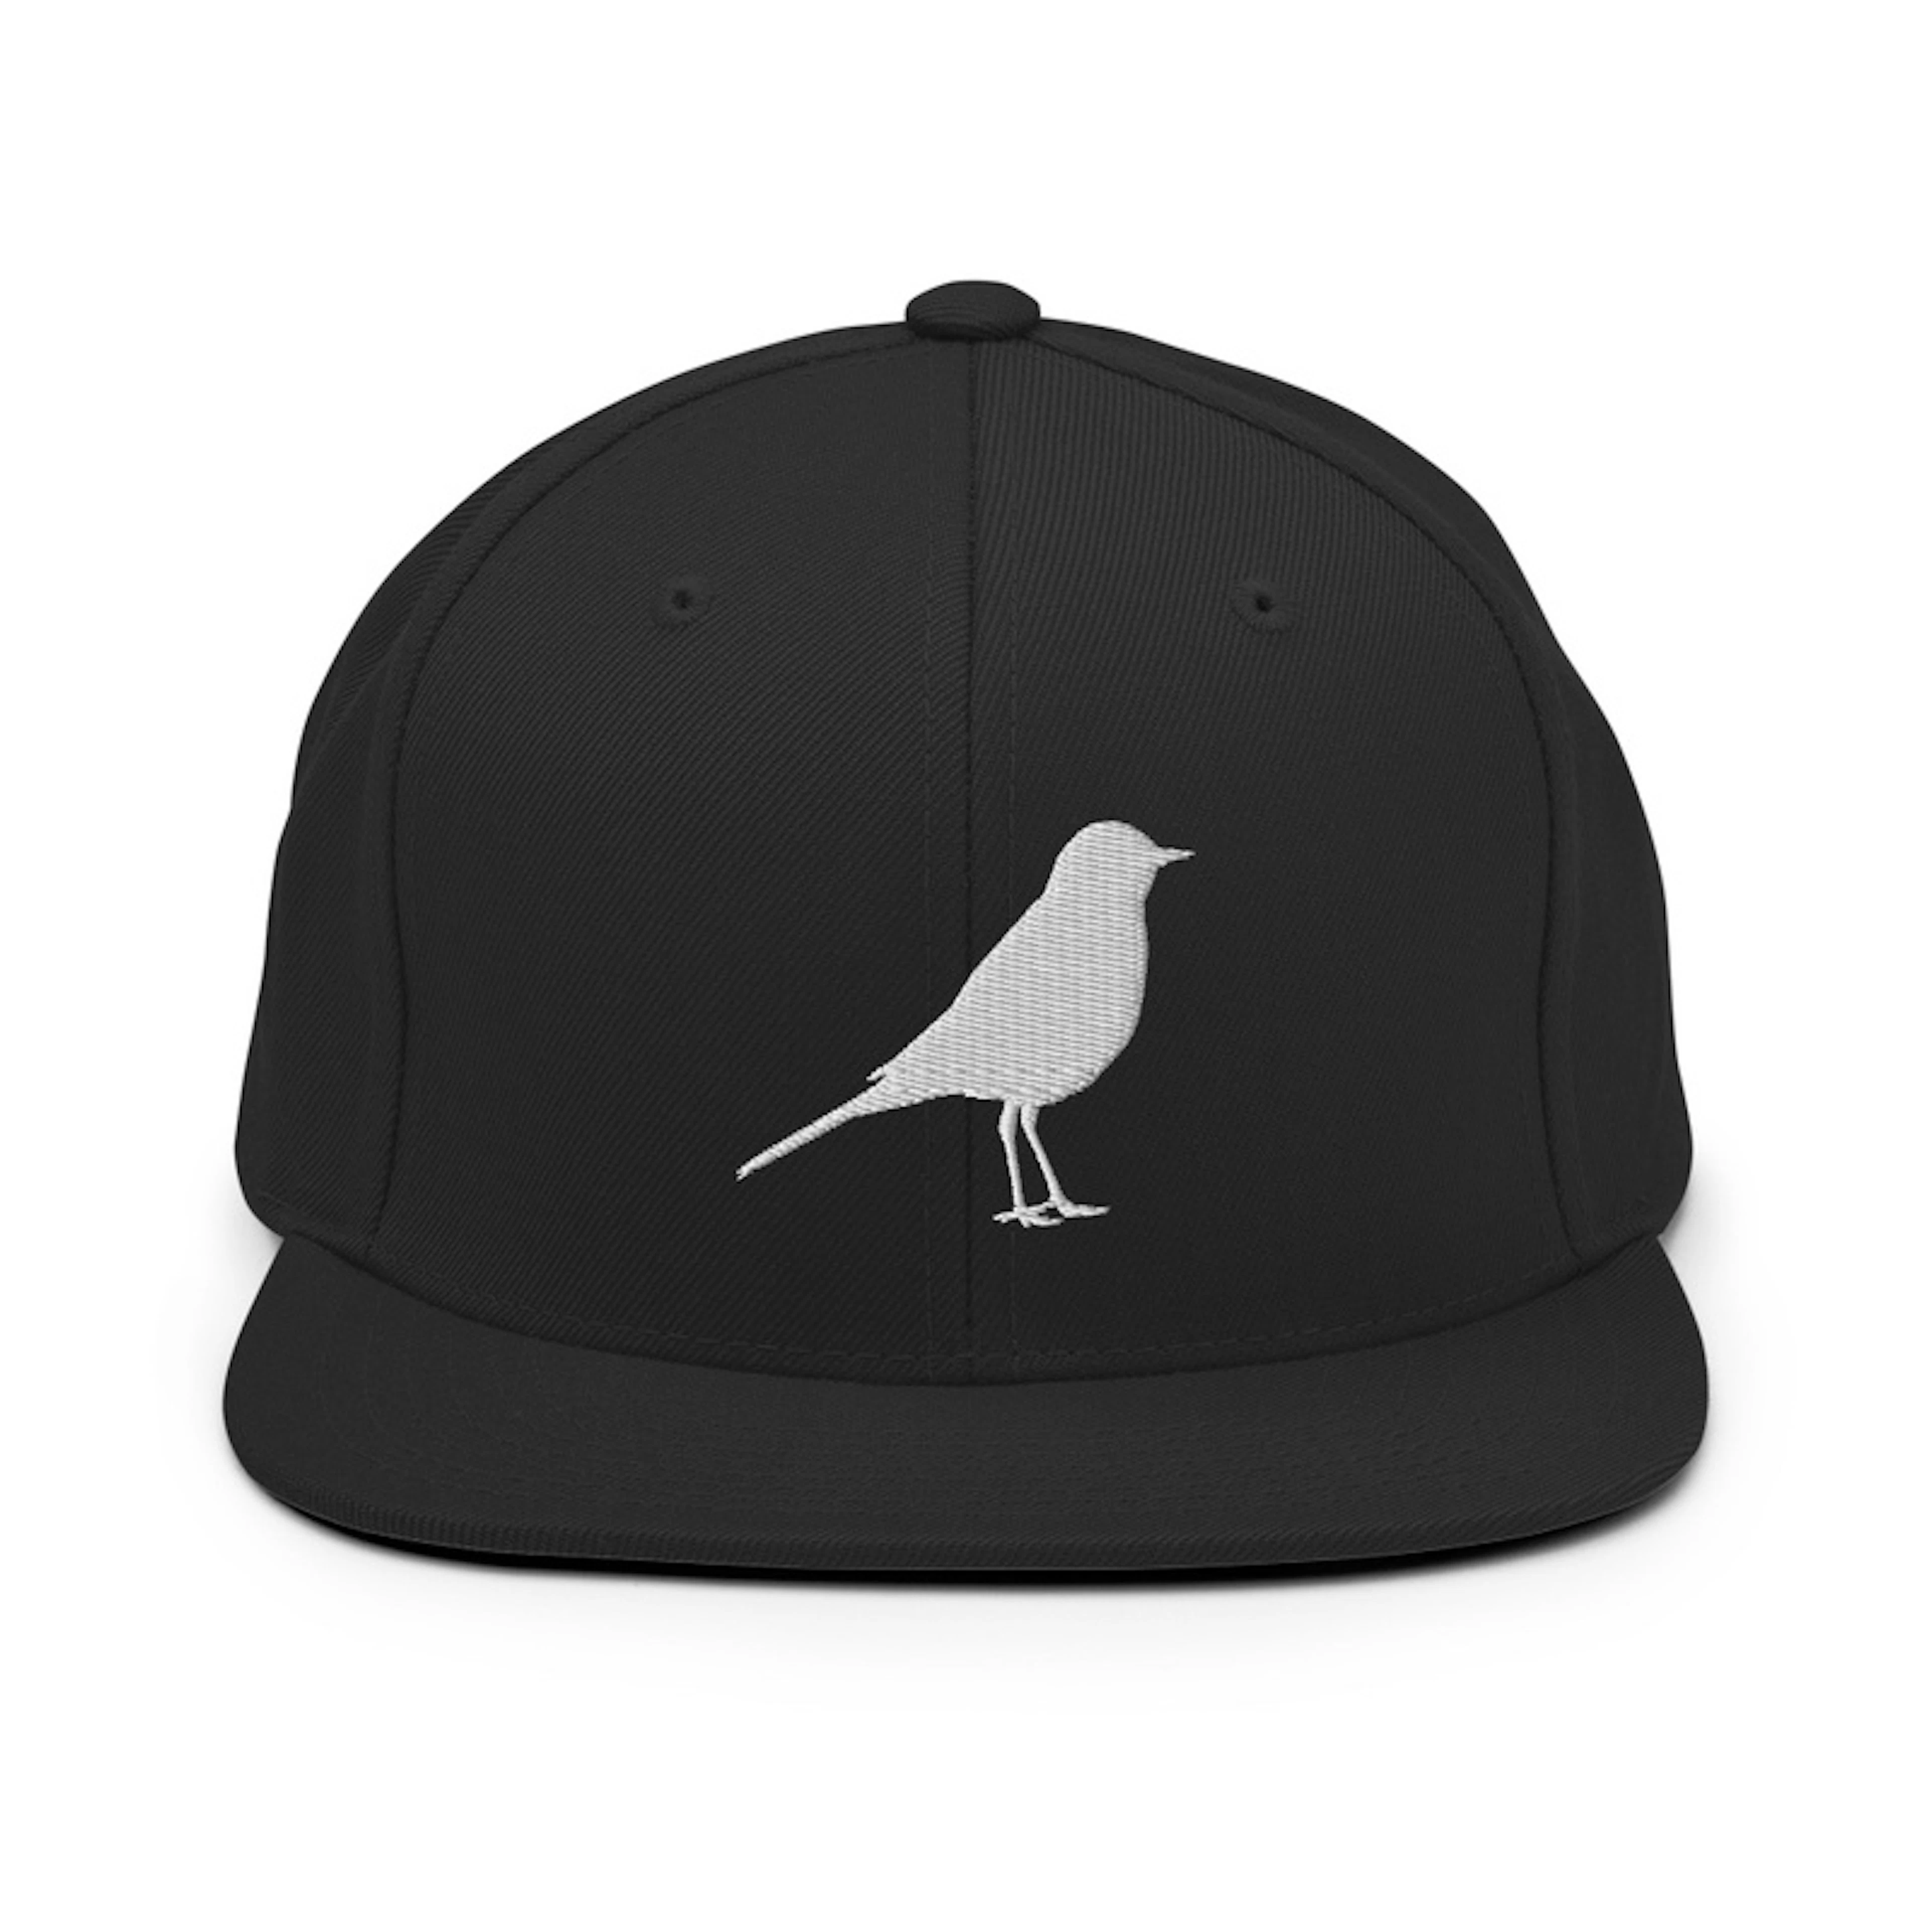 Bird Snap Back Cap